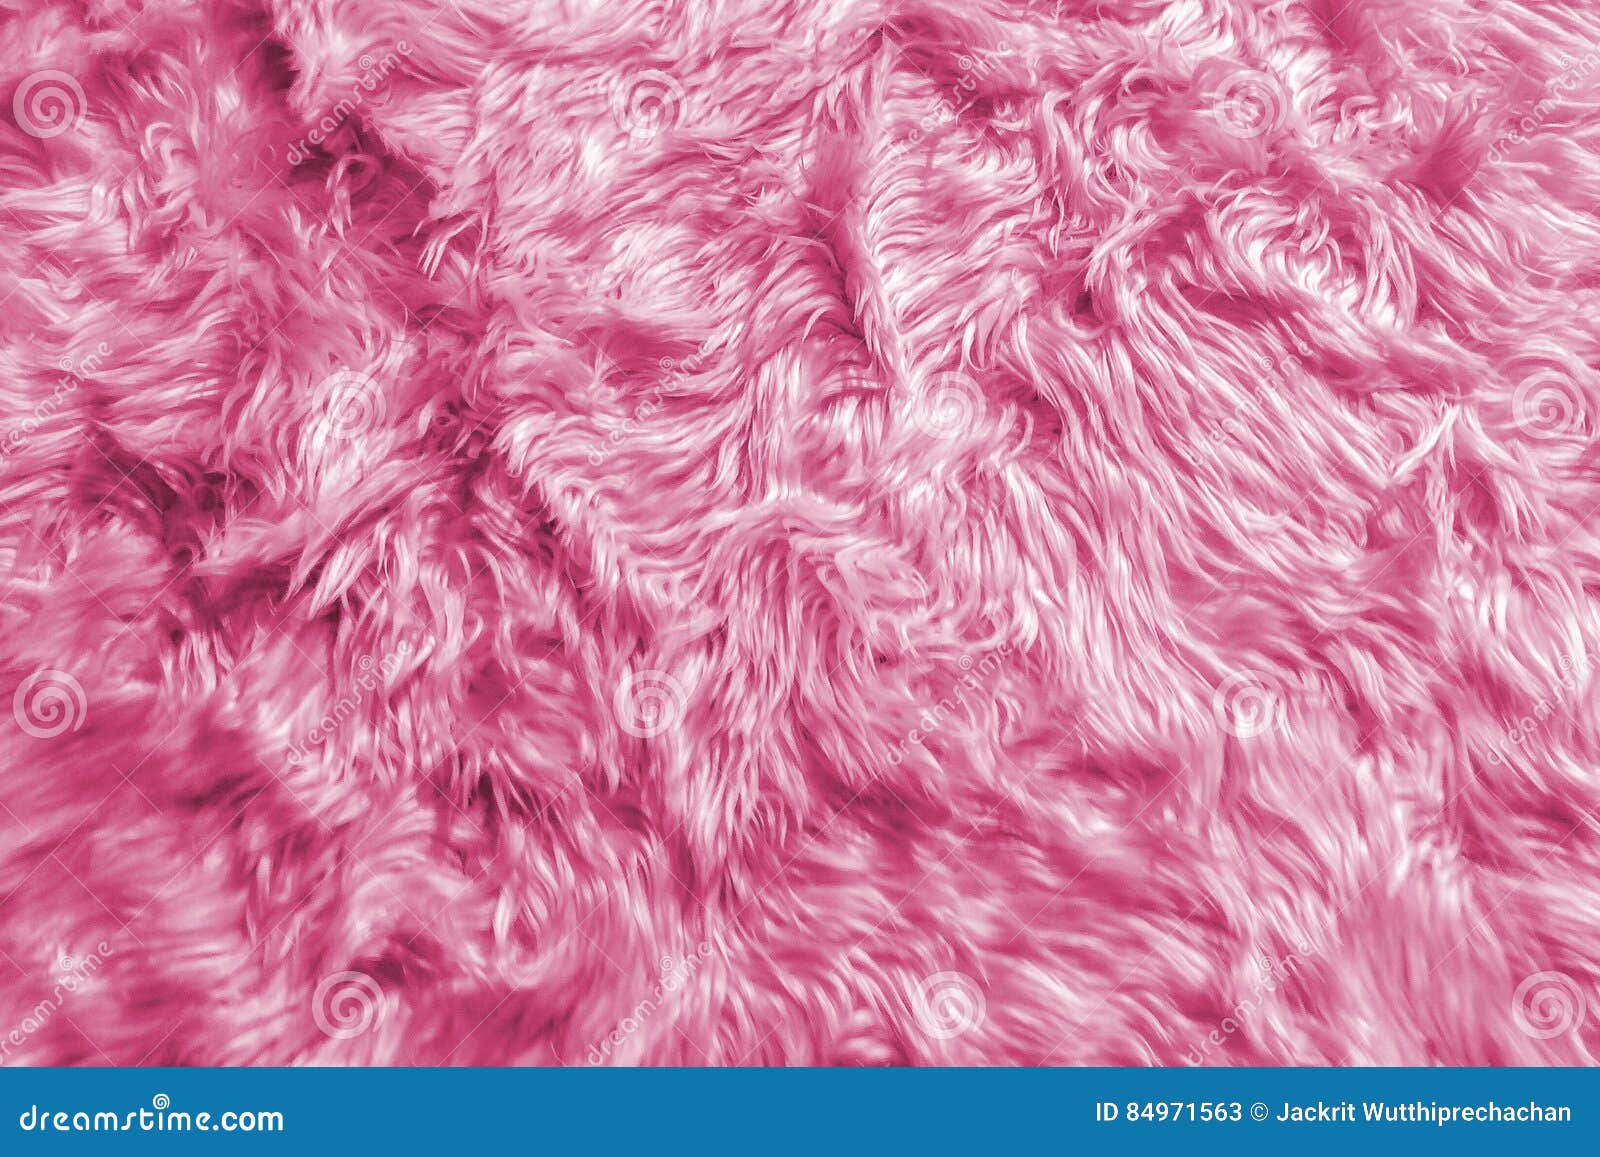 Pink sheepskin pink fur texture stock photo containing fur and textile